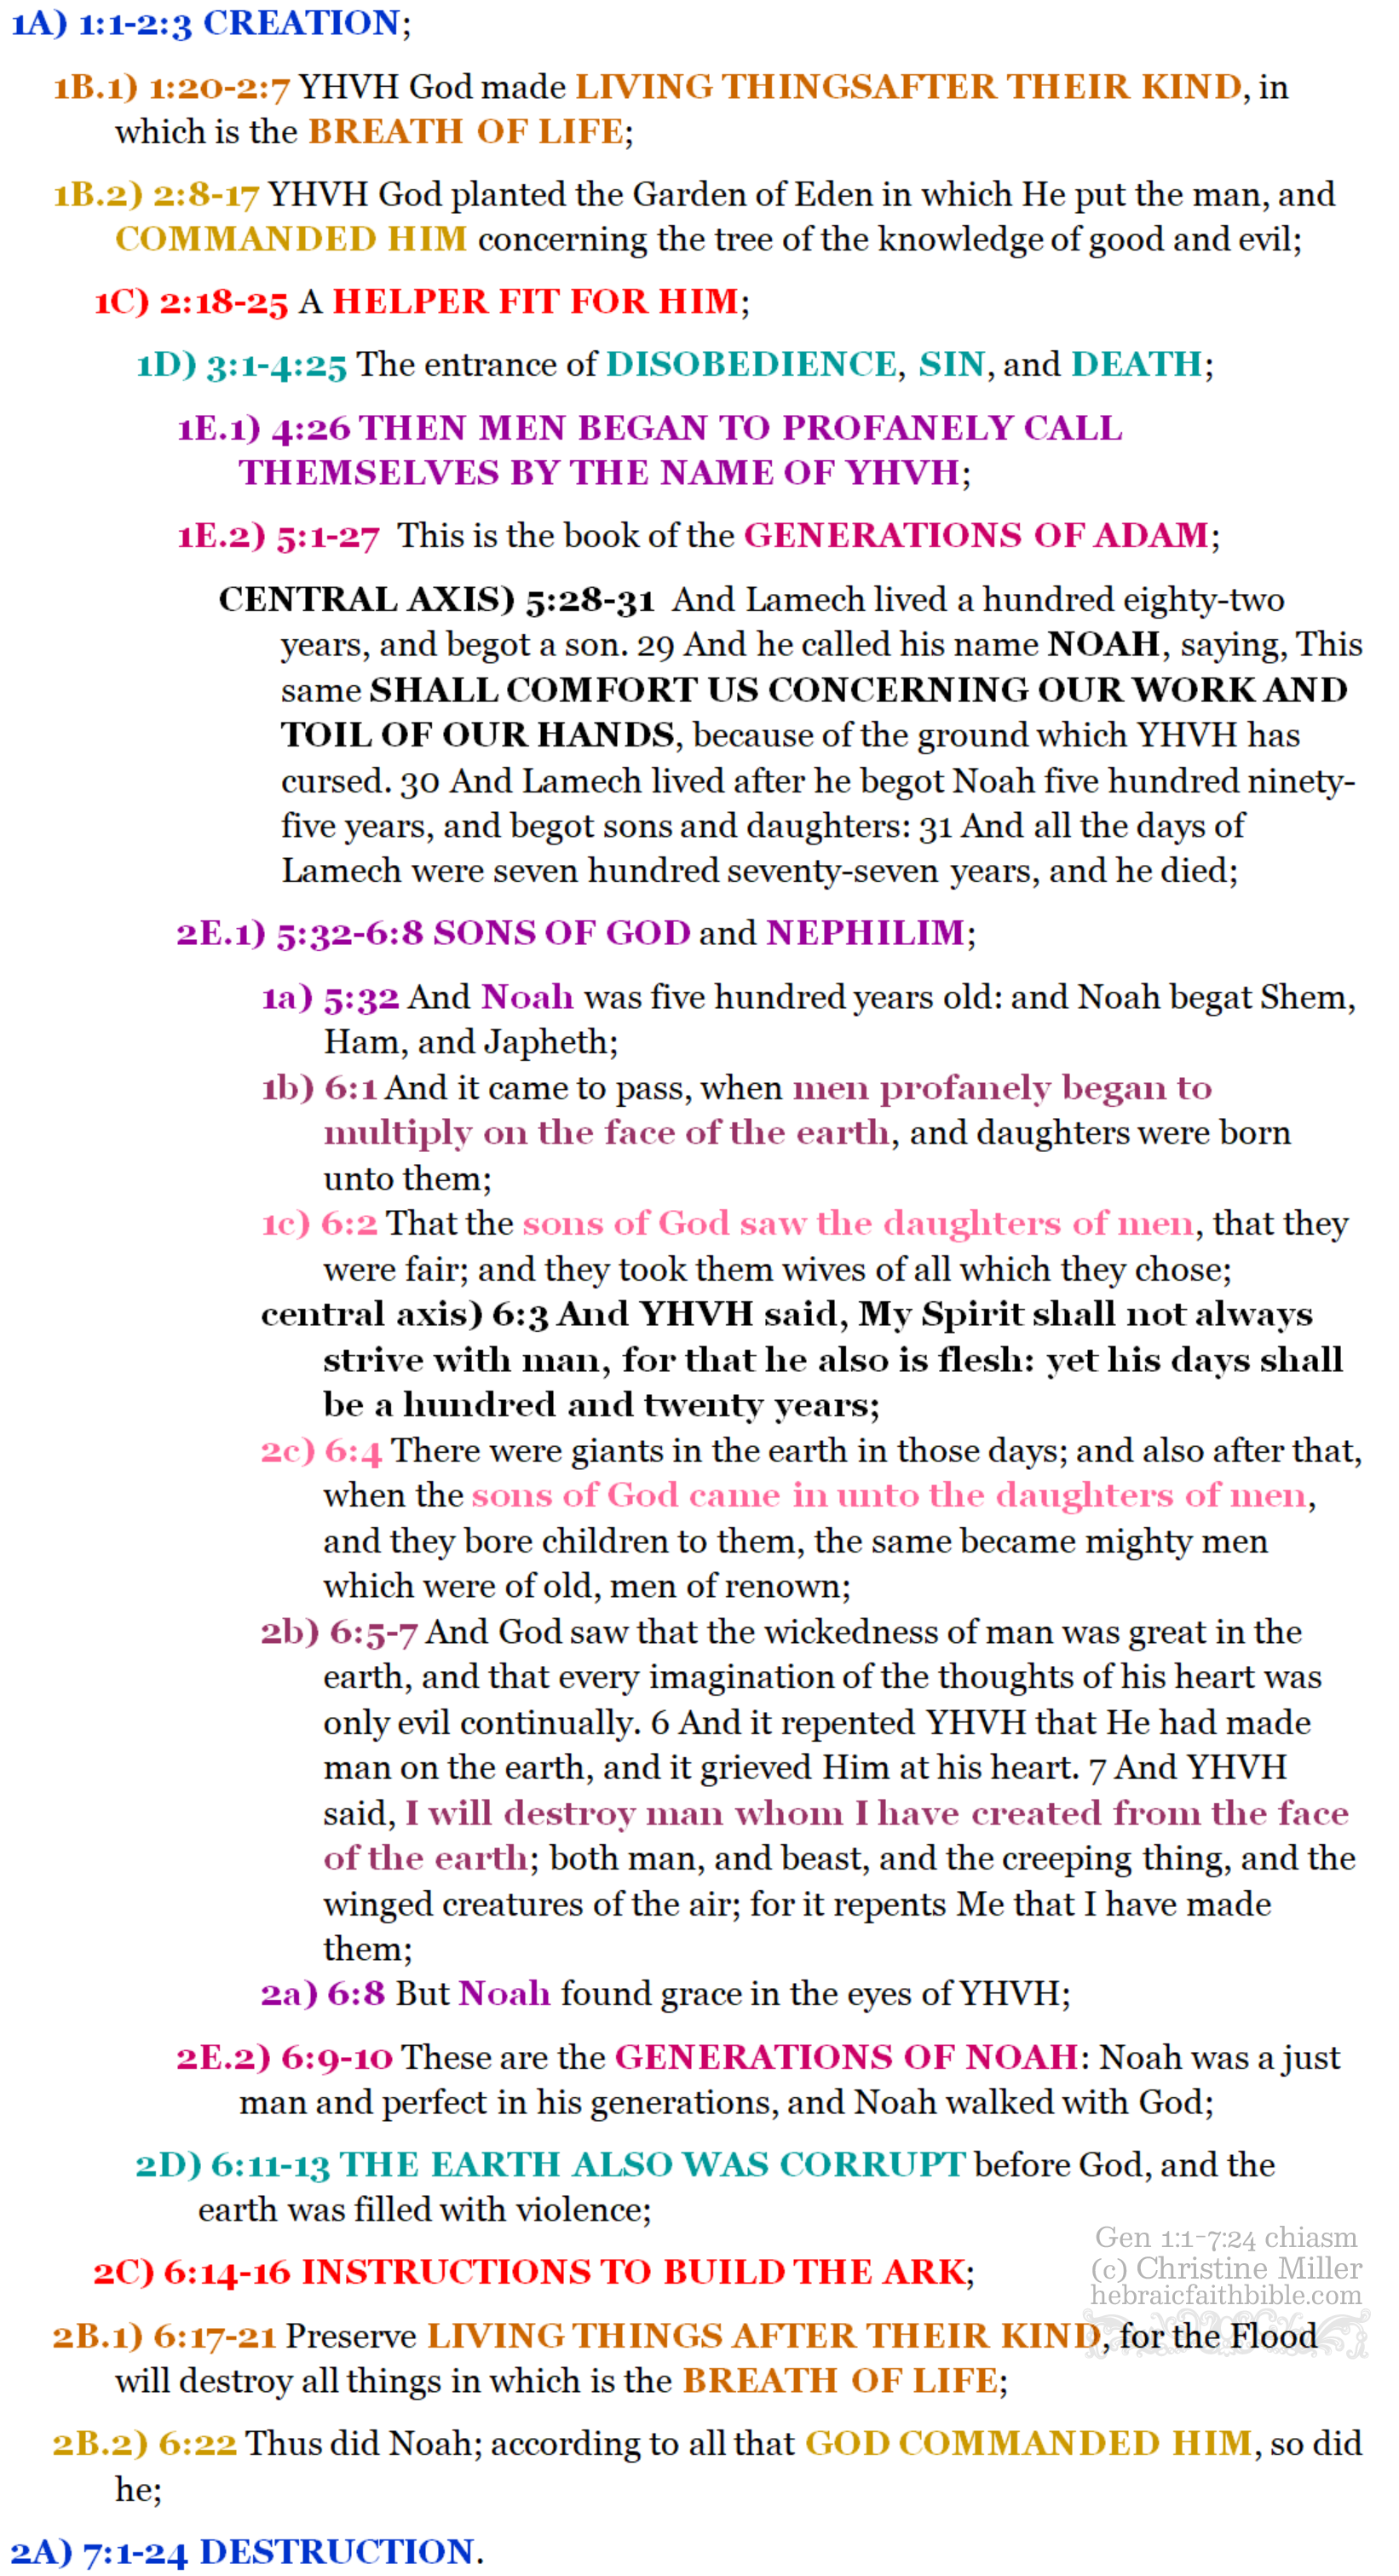 Gen 1:1-7:24 chiasm | hebraicfaithbible.com